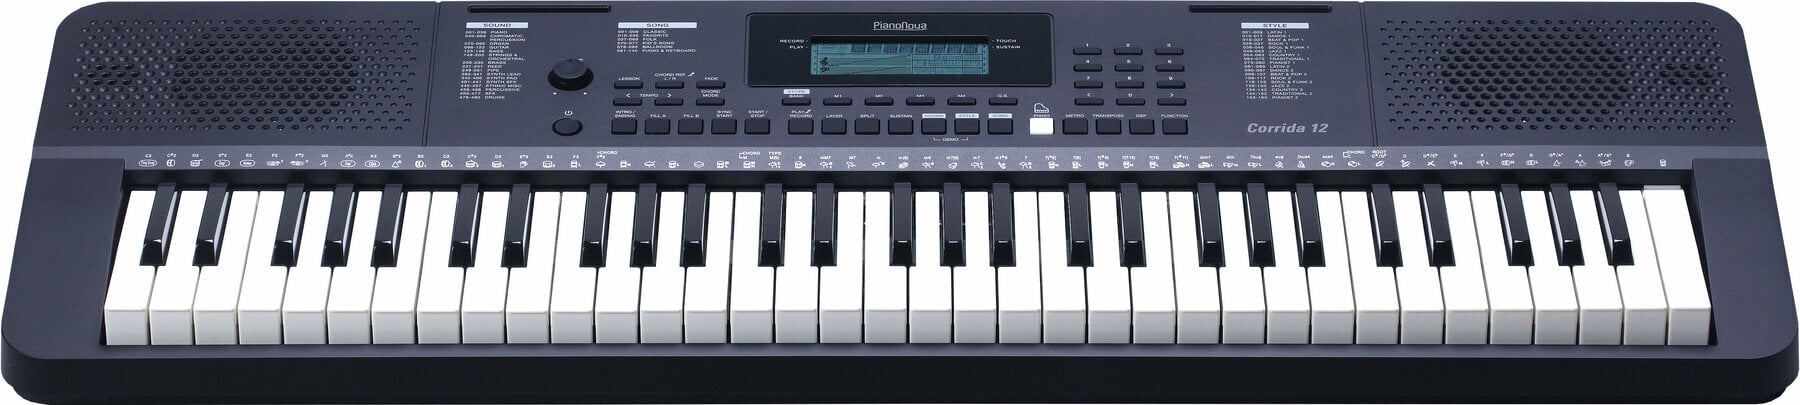 Keyboard mit Touch Response Pianonova Corrida 12